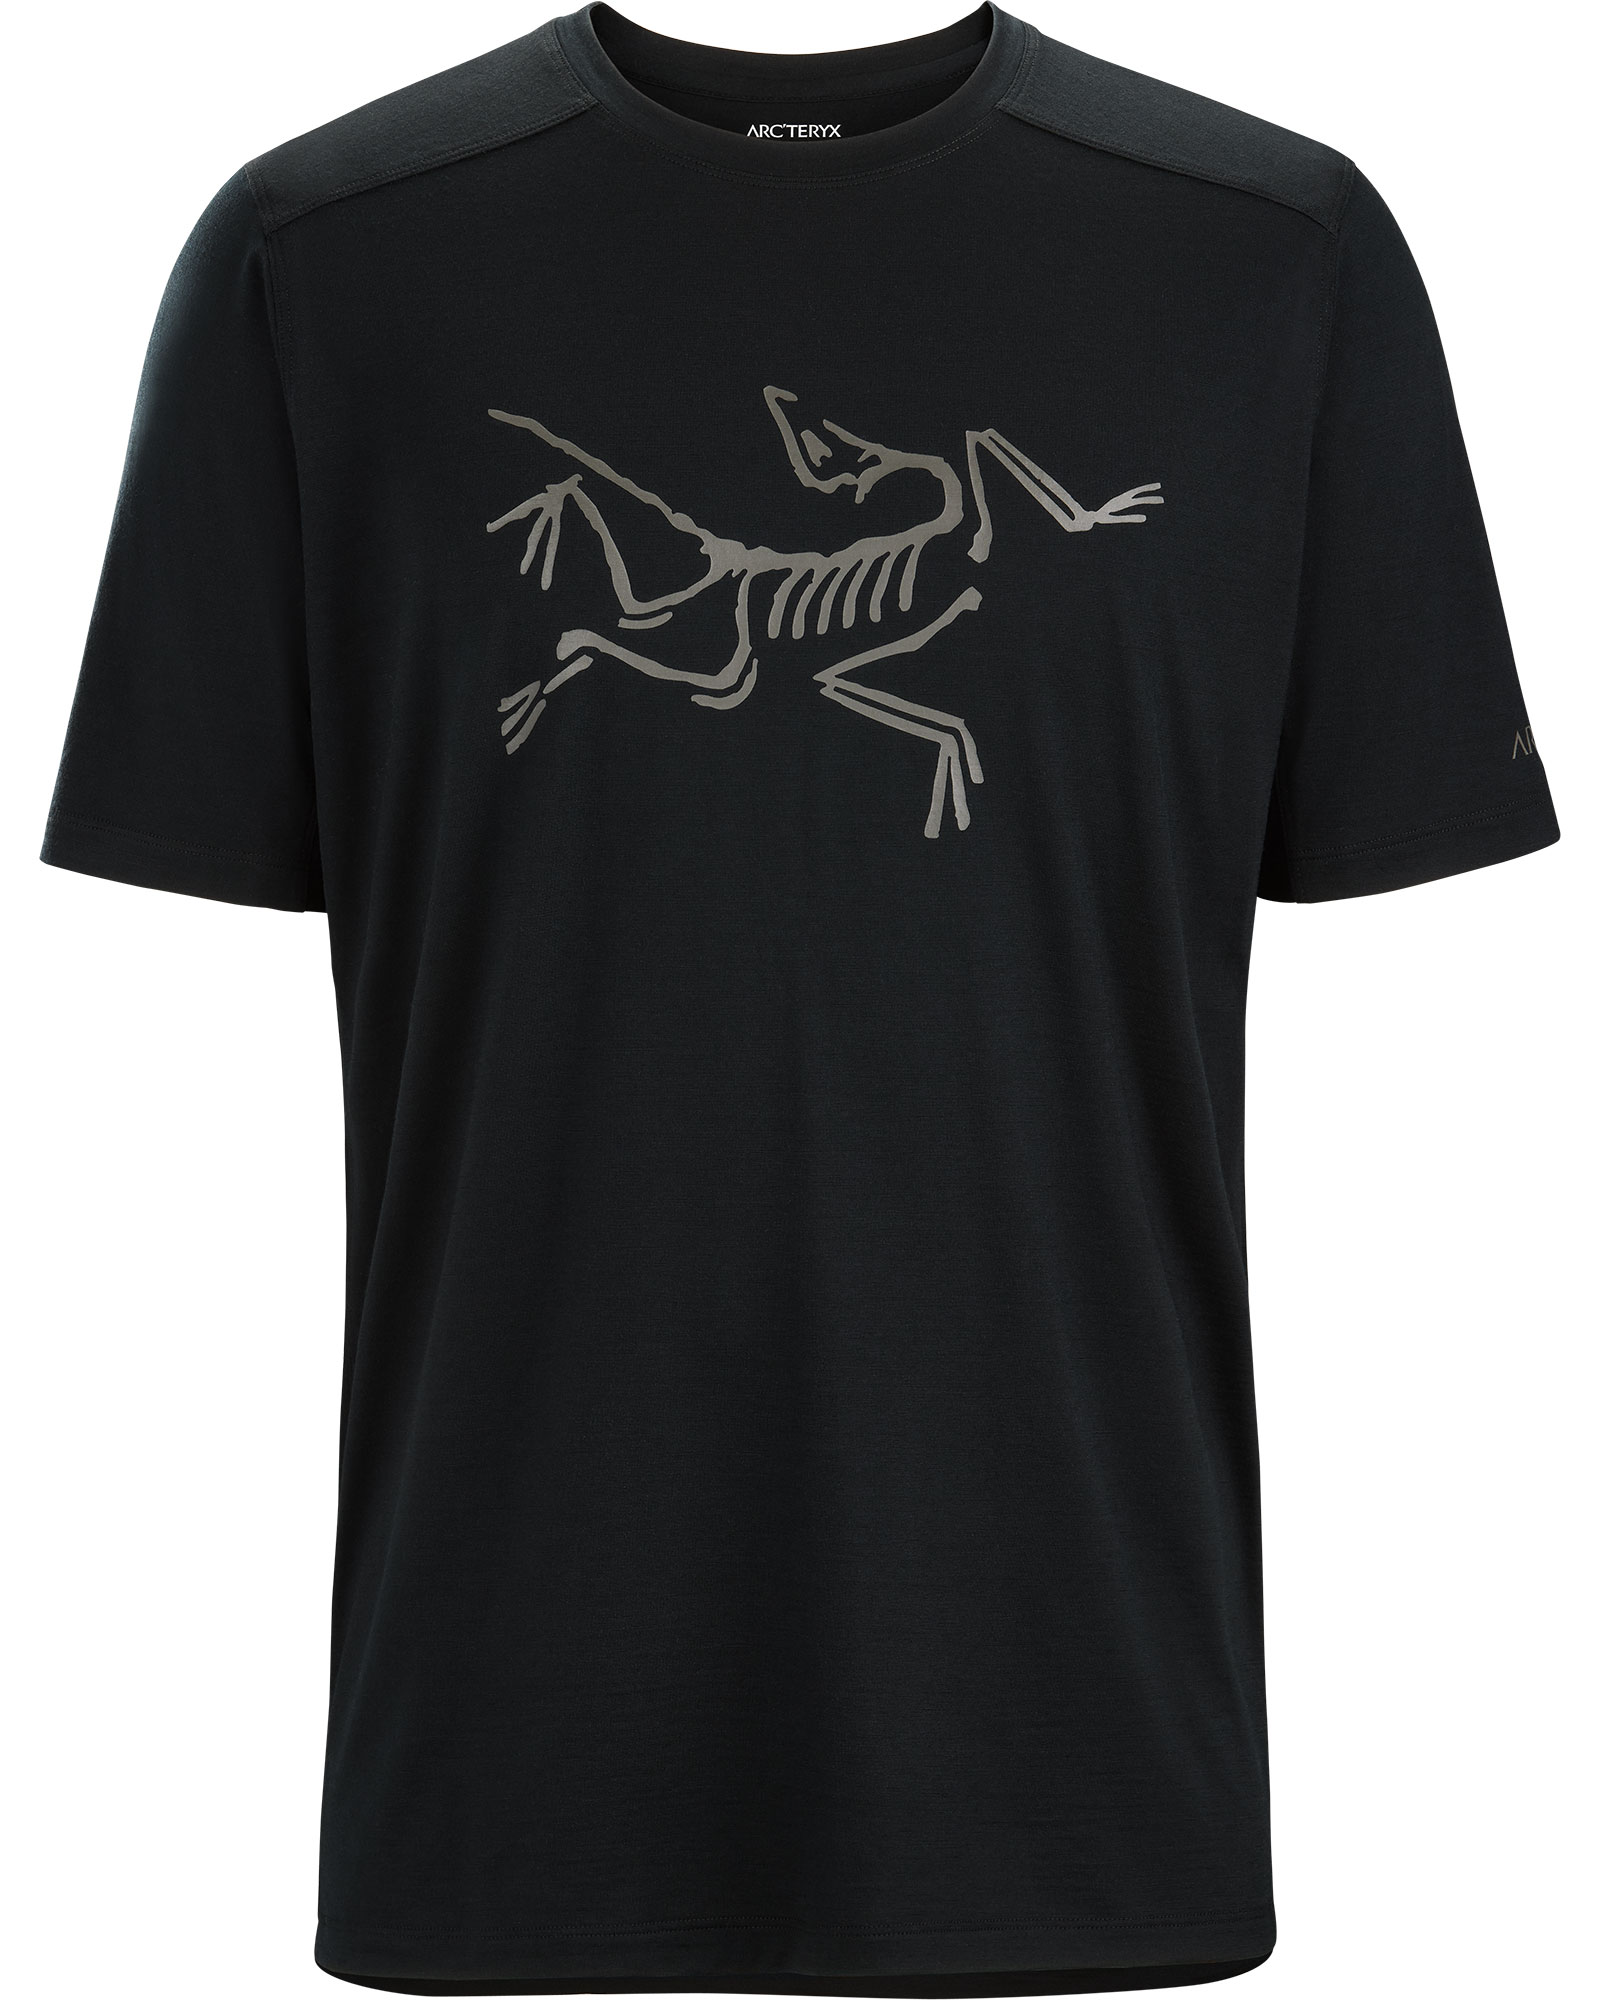 Arc'teryx Men's Ionia Logo T-Shirt